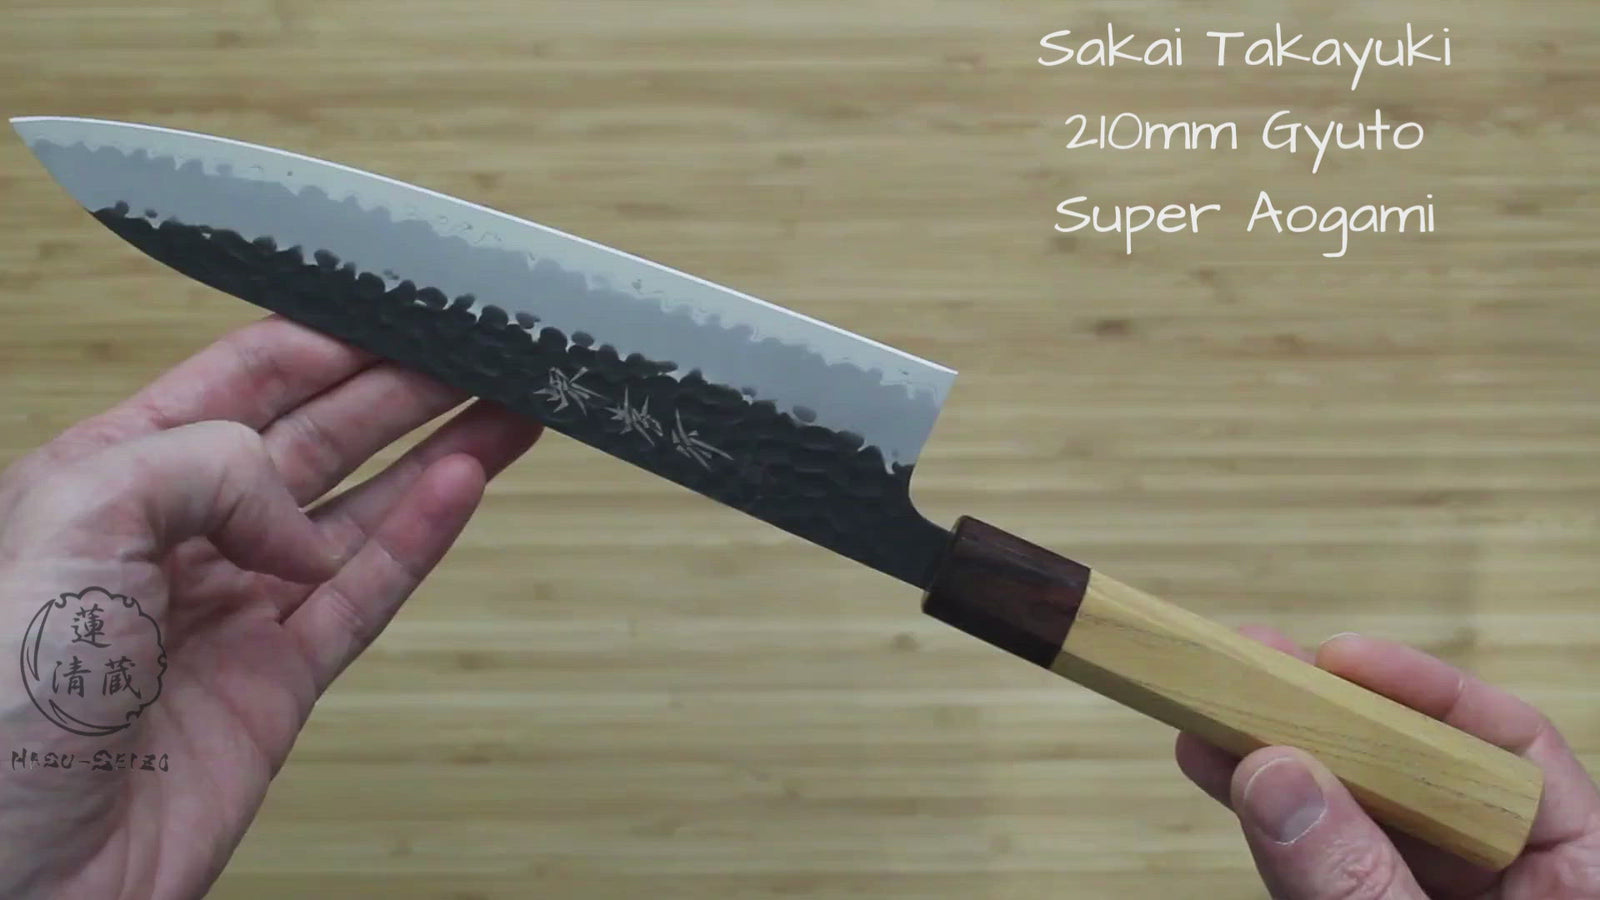 MITSUMOTO SAKARI 7 inch Japanese Chef Knife, Professional Black